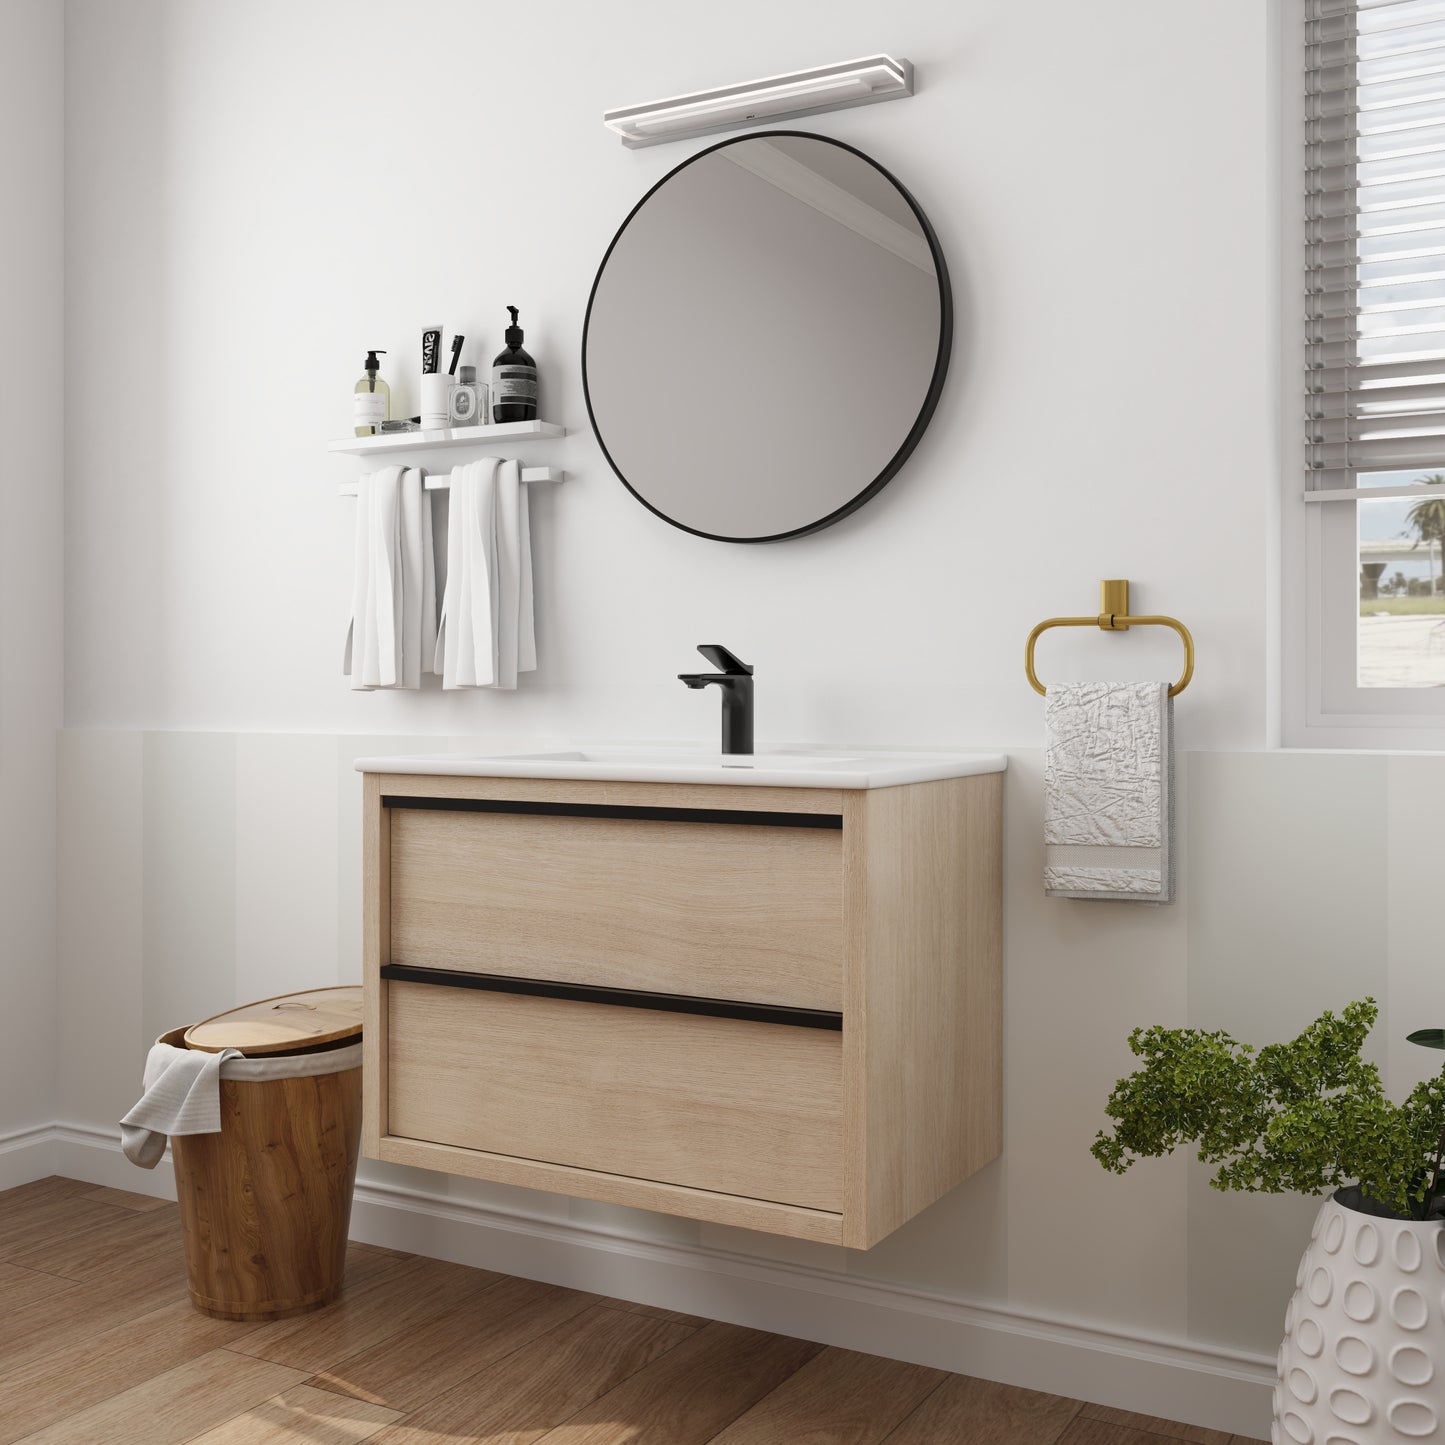 30" Bathroom Vanity with 2/3 Soft Close drawers,  White Ceramic Basin